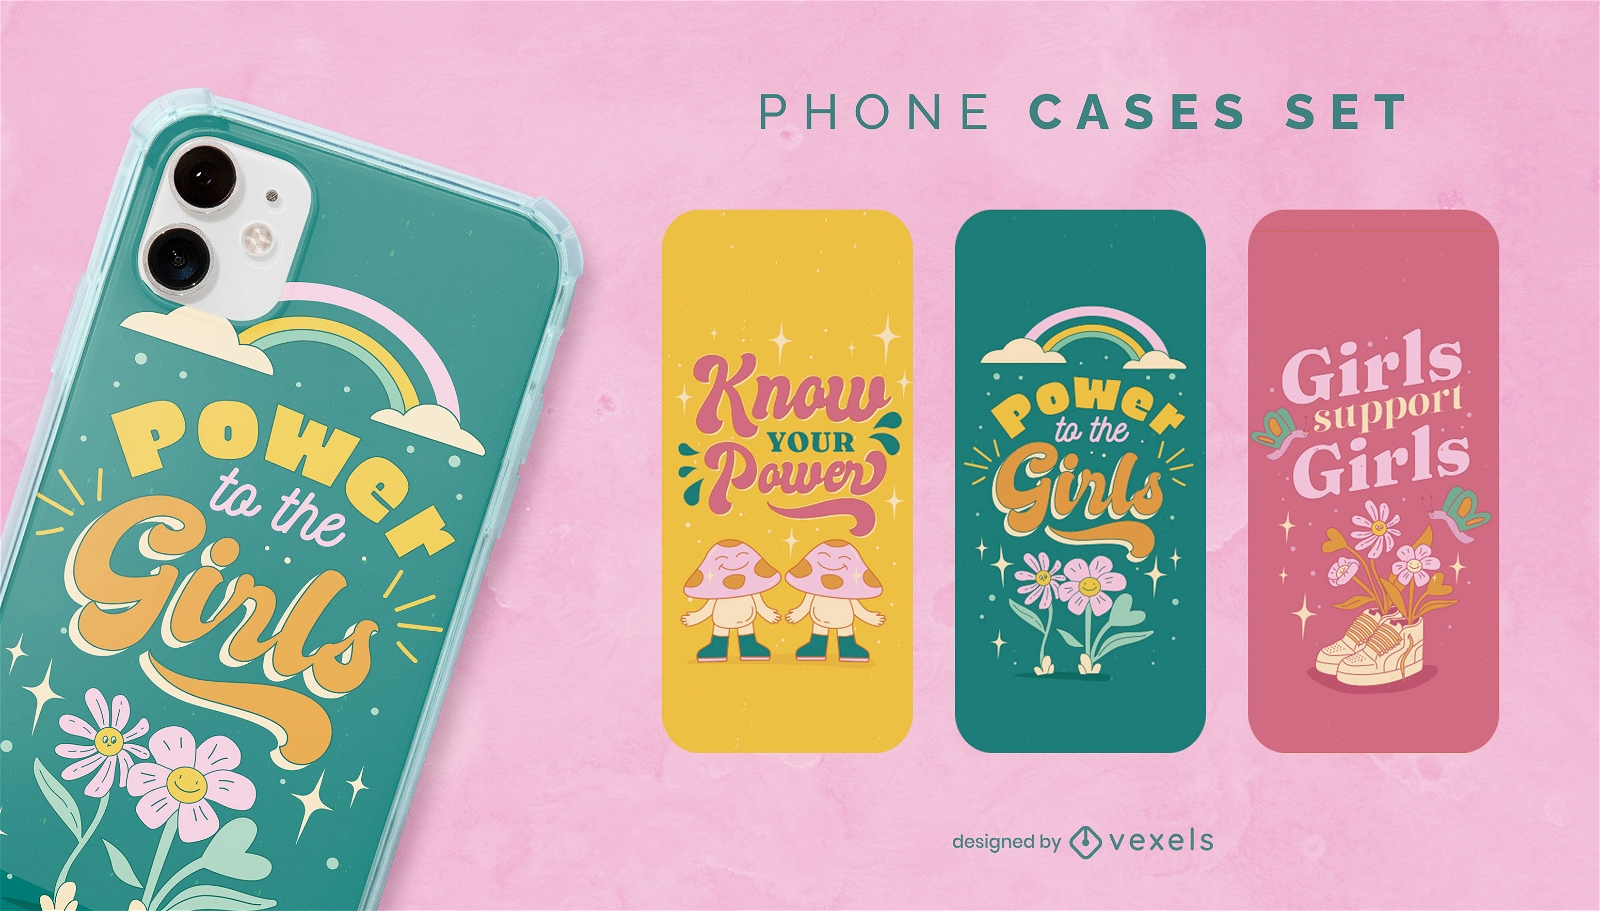 Women's day phone cases set design